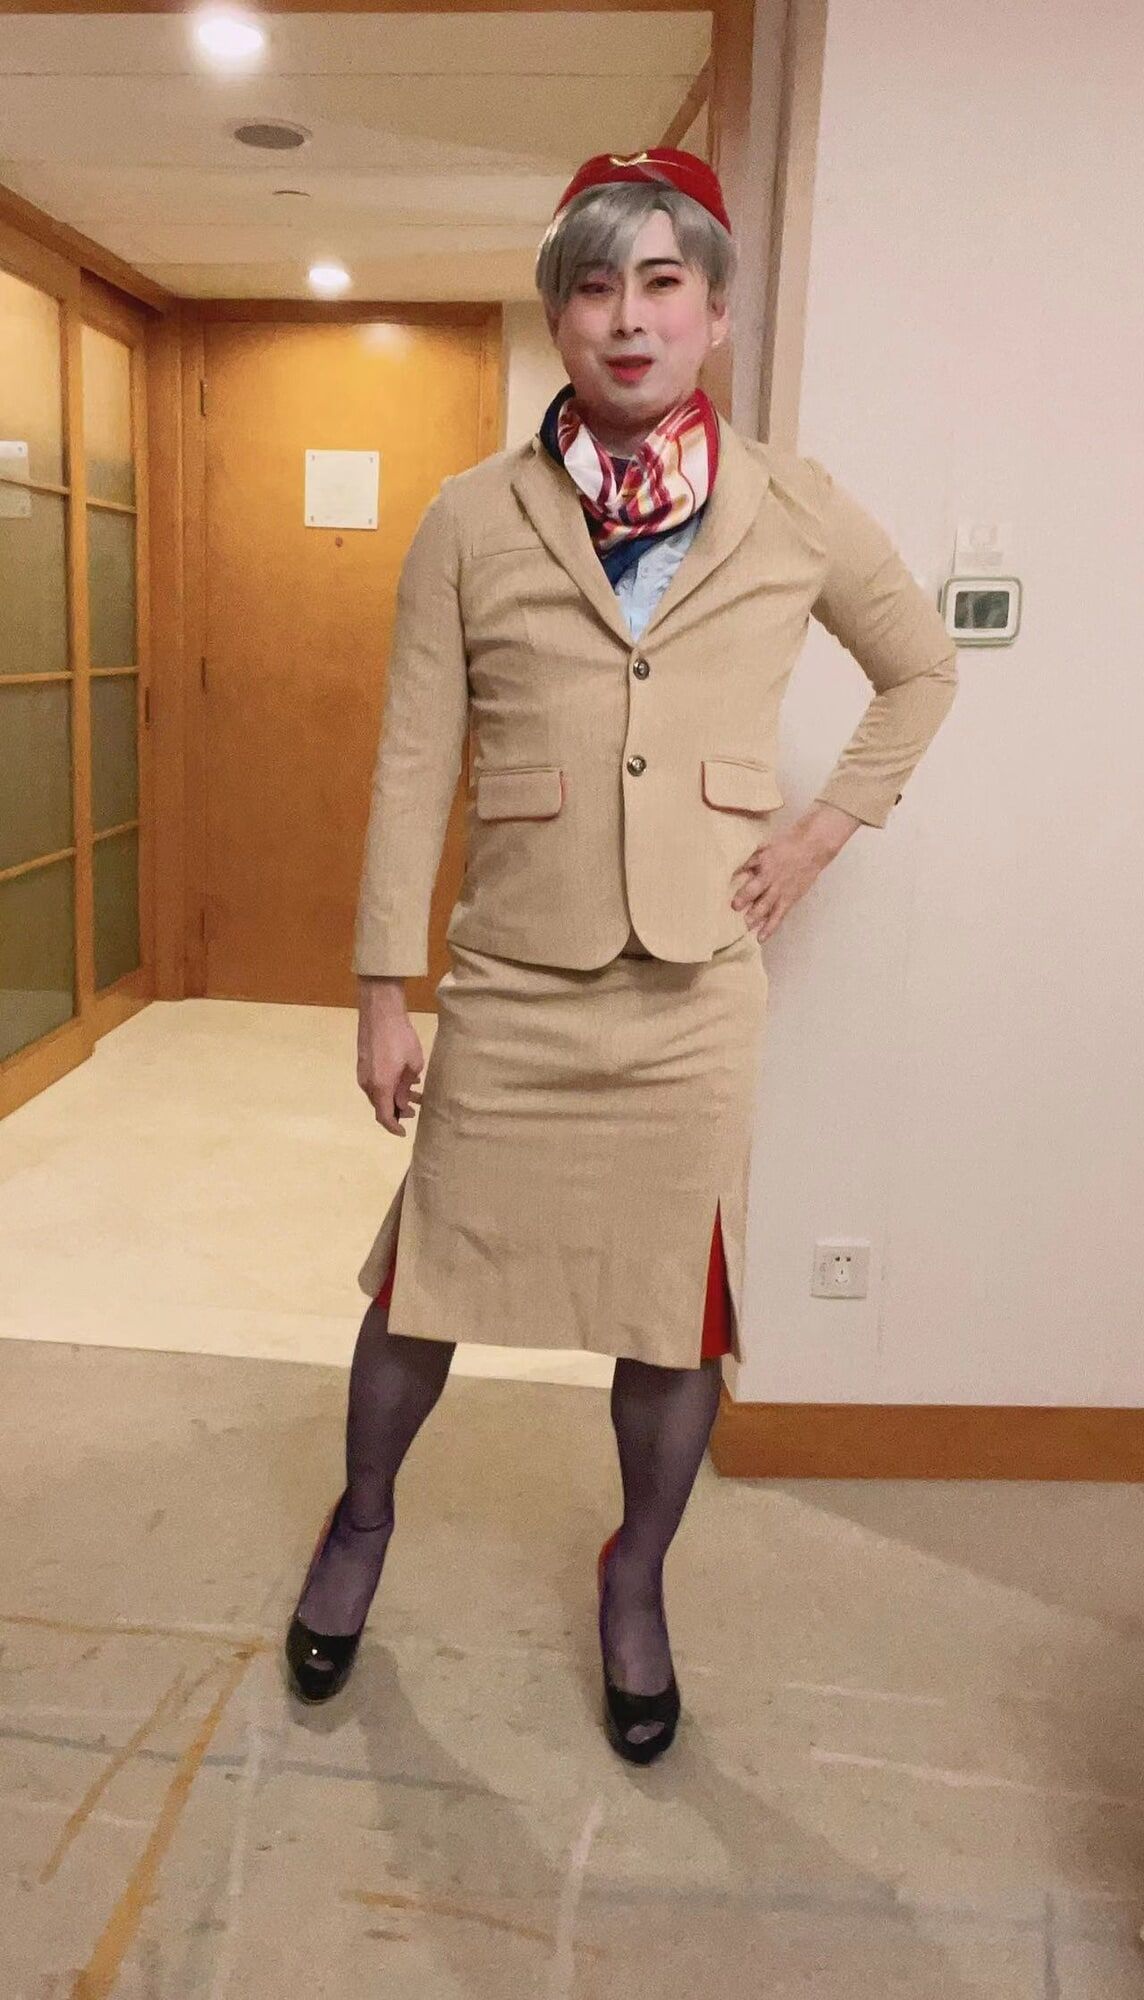 Asian femboy sissy in Emirates flight attendant dress #9